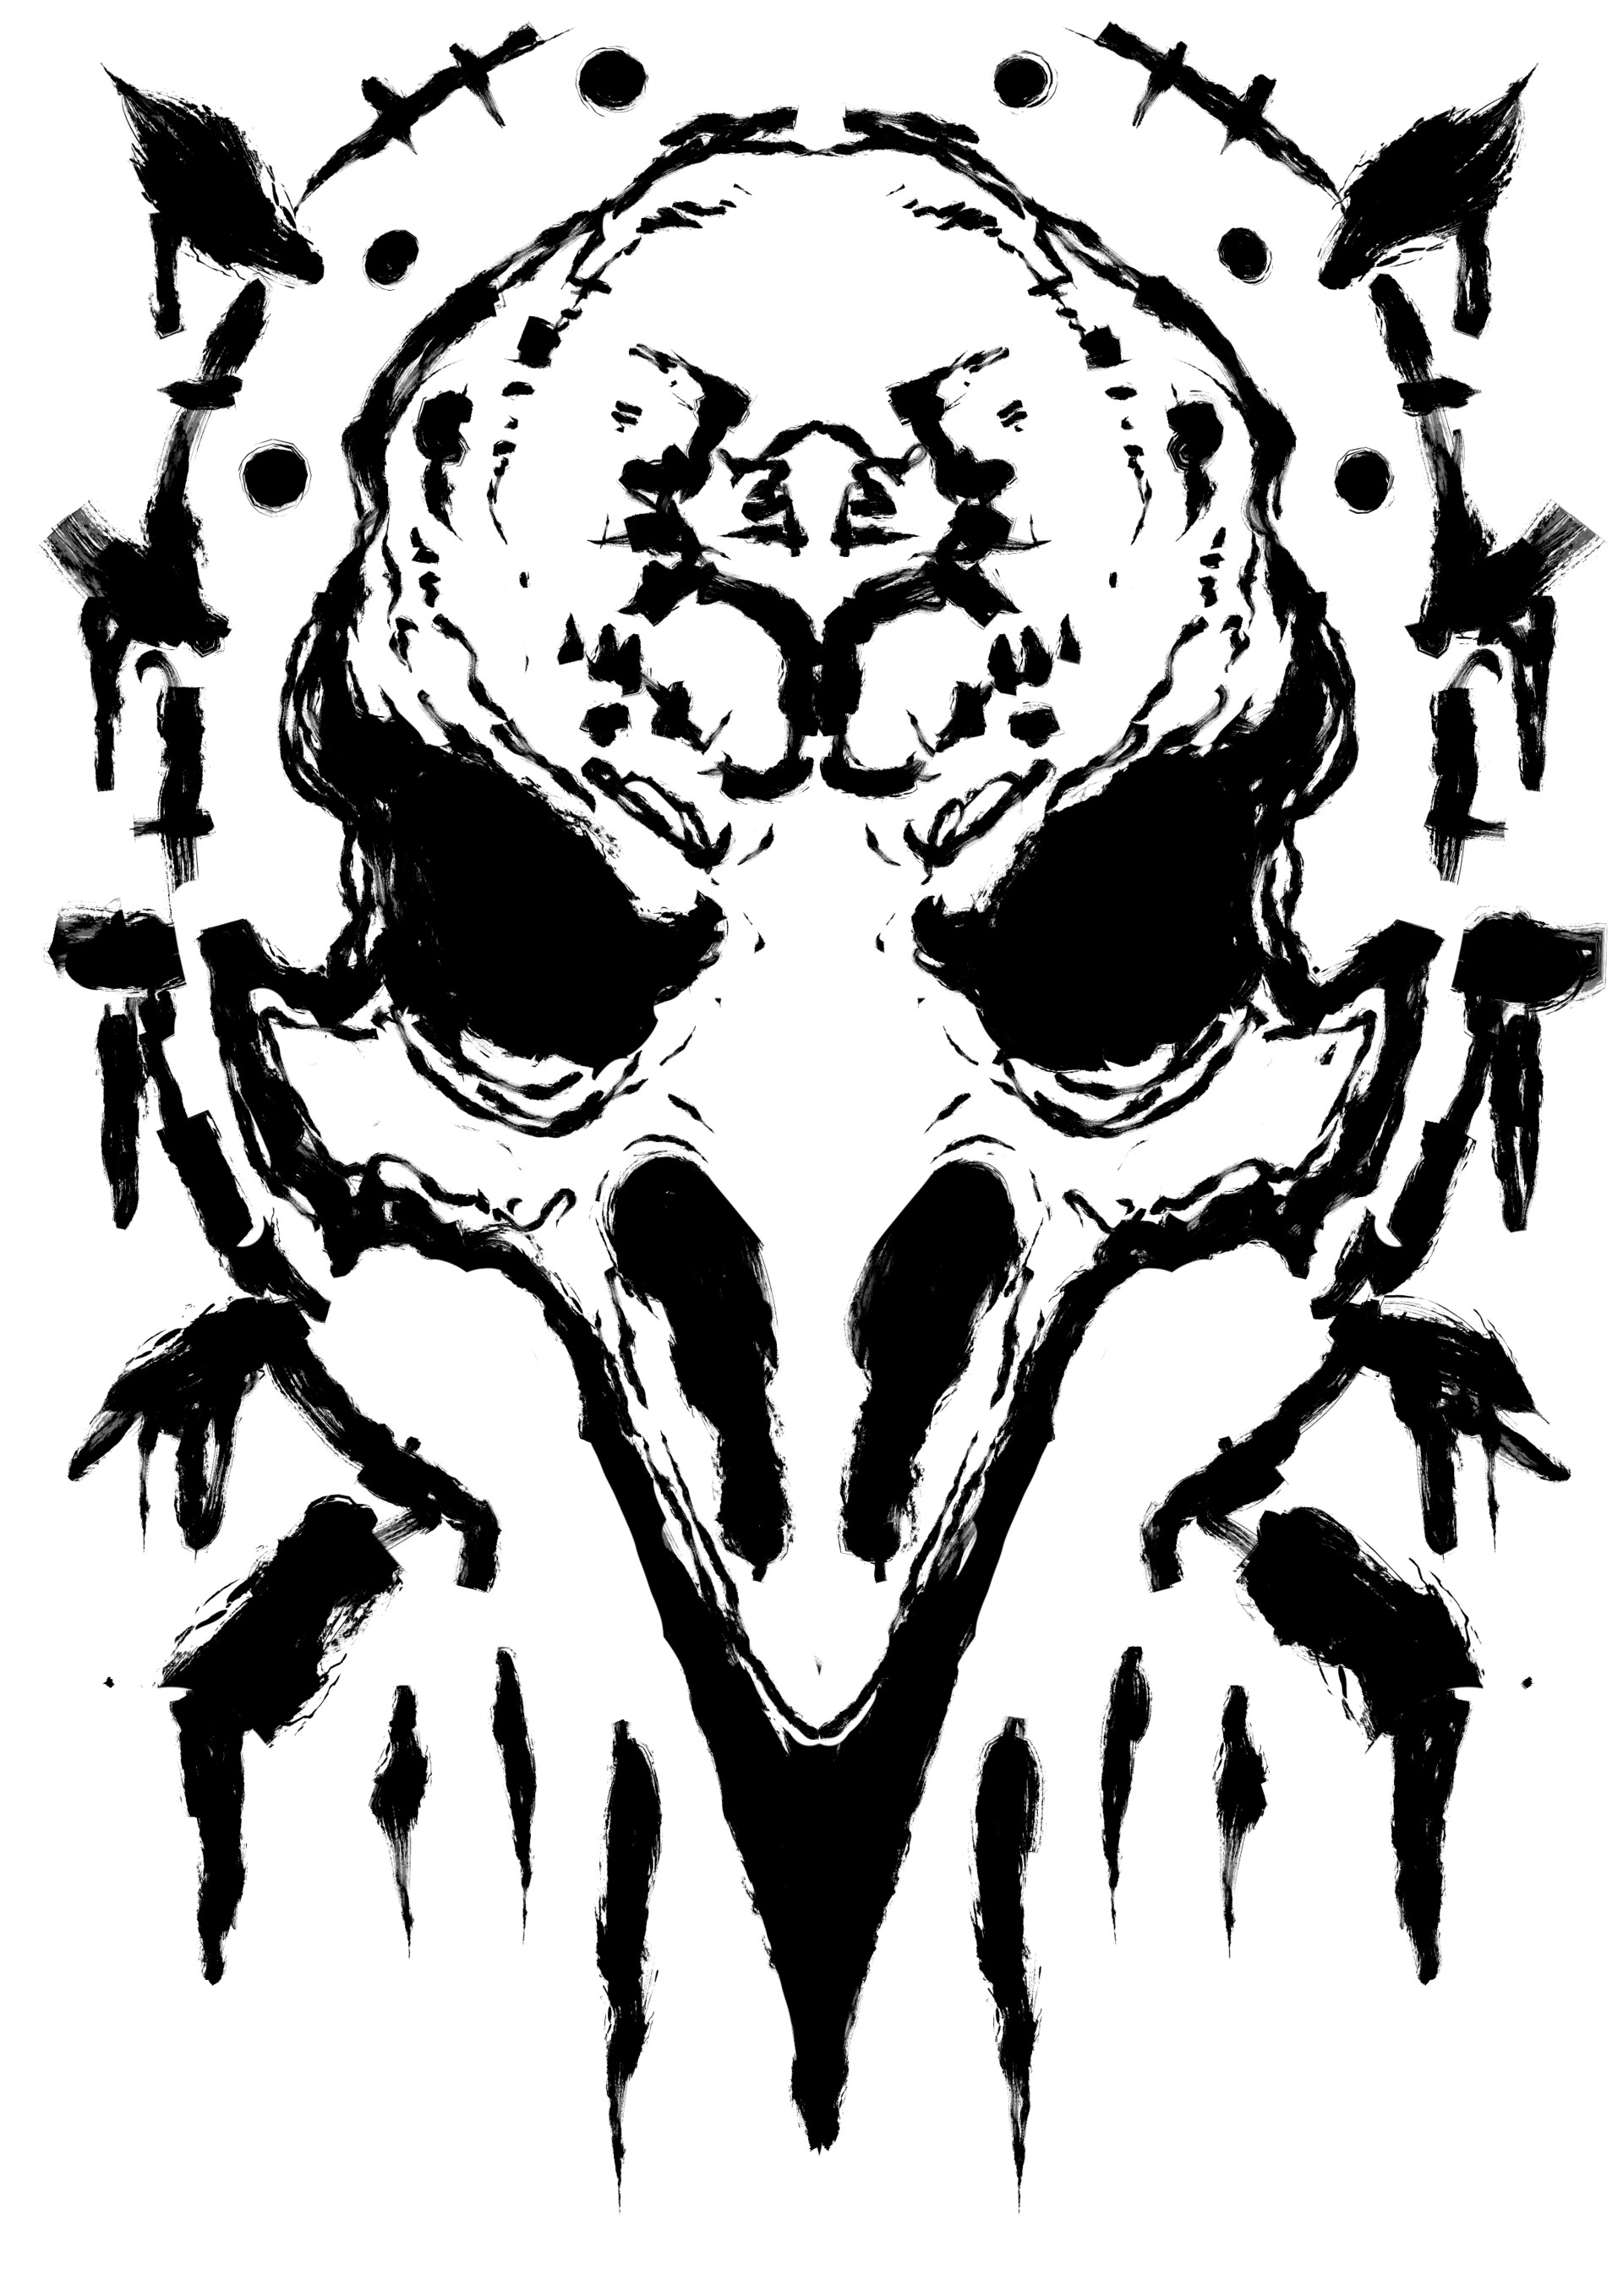 ArtStation - Raven skull with ink